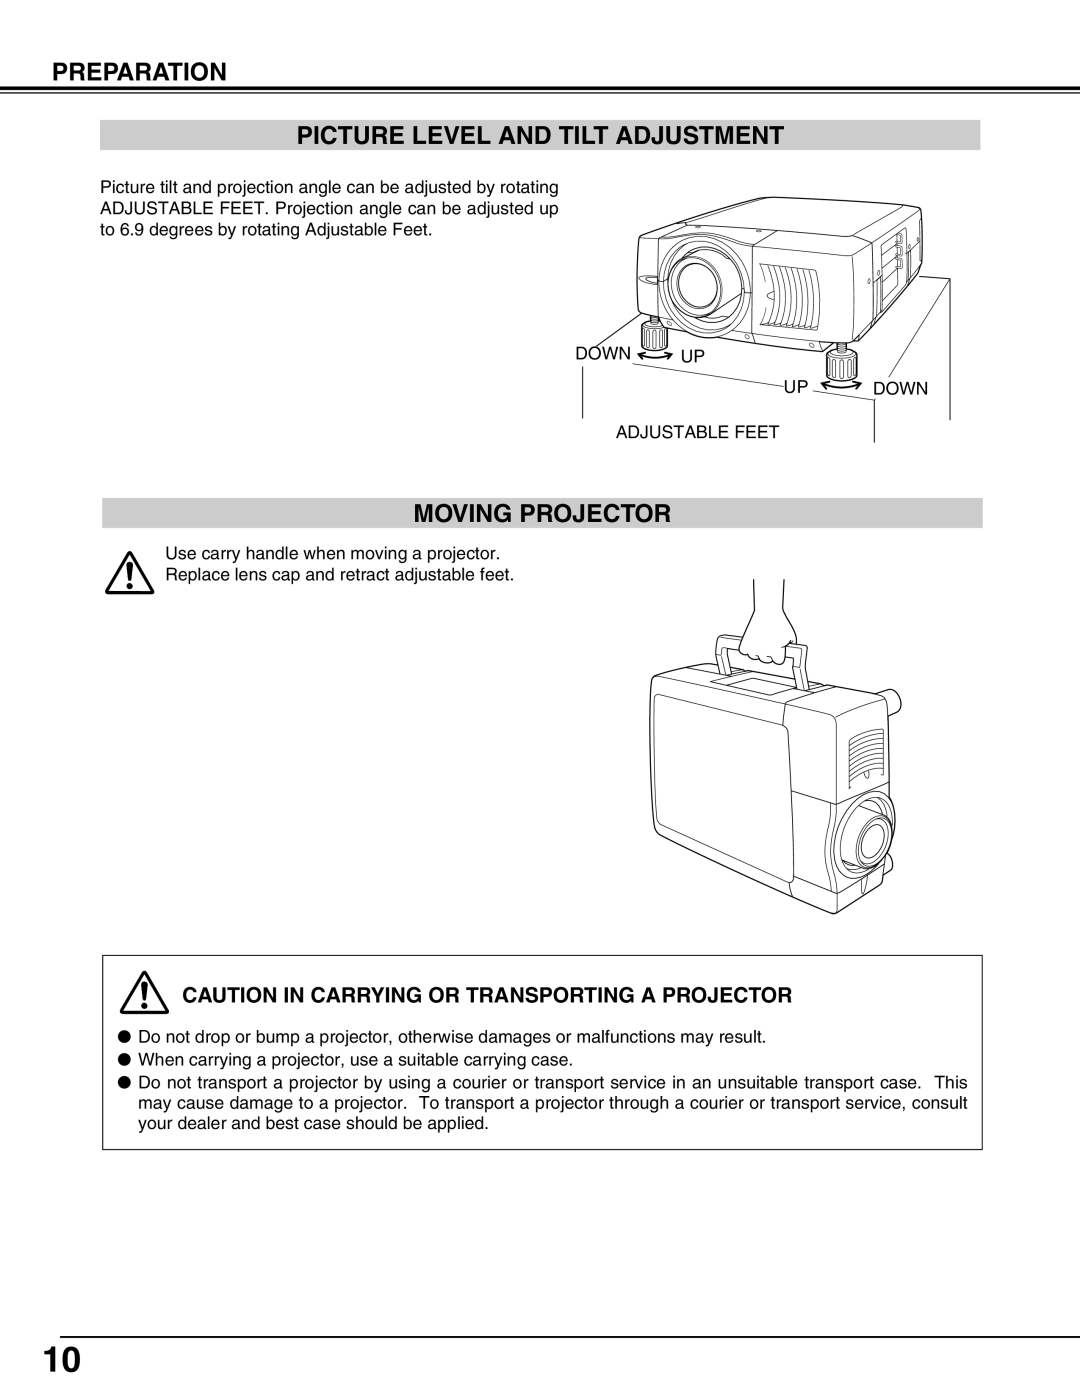 Eiki LC-SX4LA instruction manual Preparation Picture Level And Tilt Adjustment, Moving Projector 